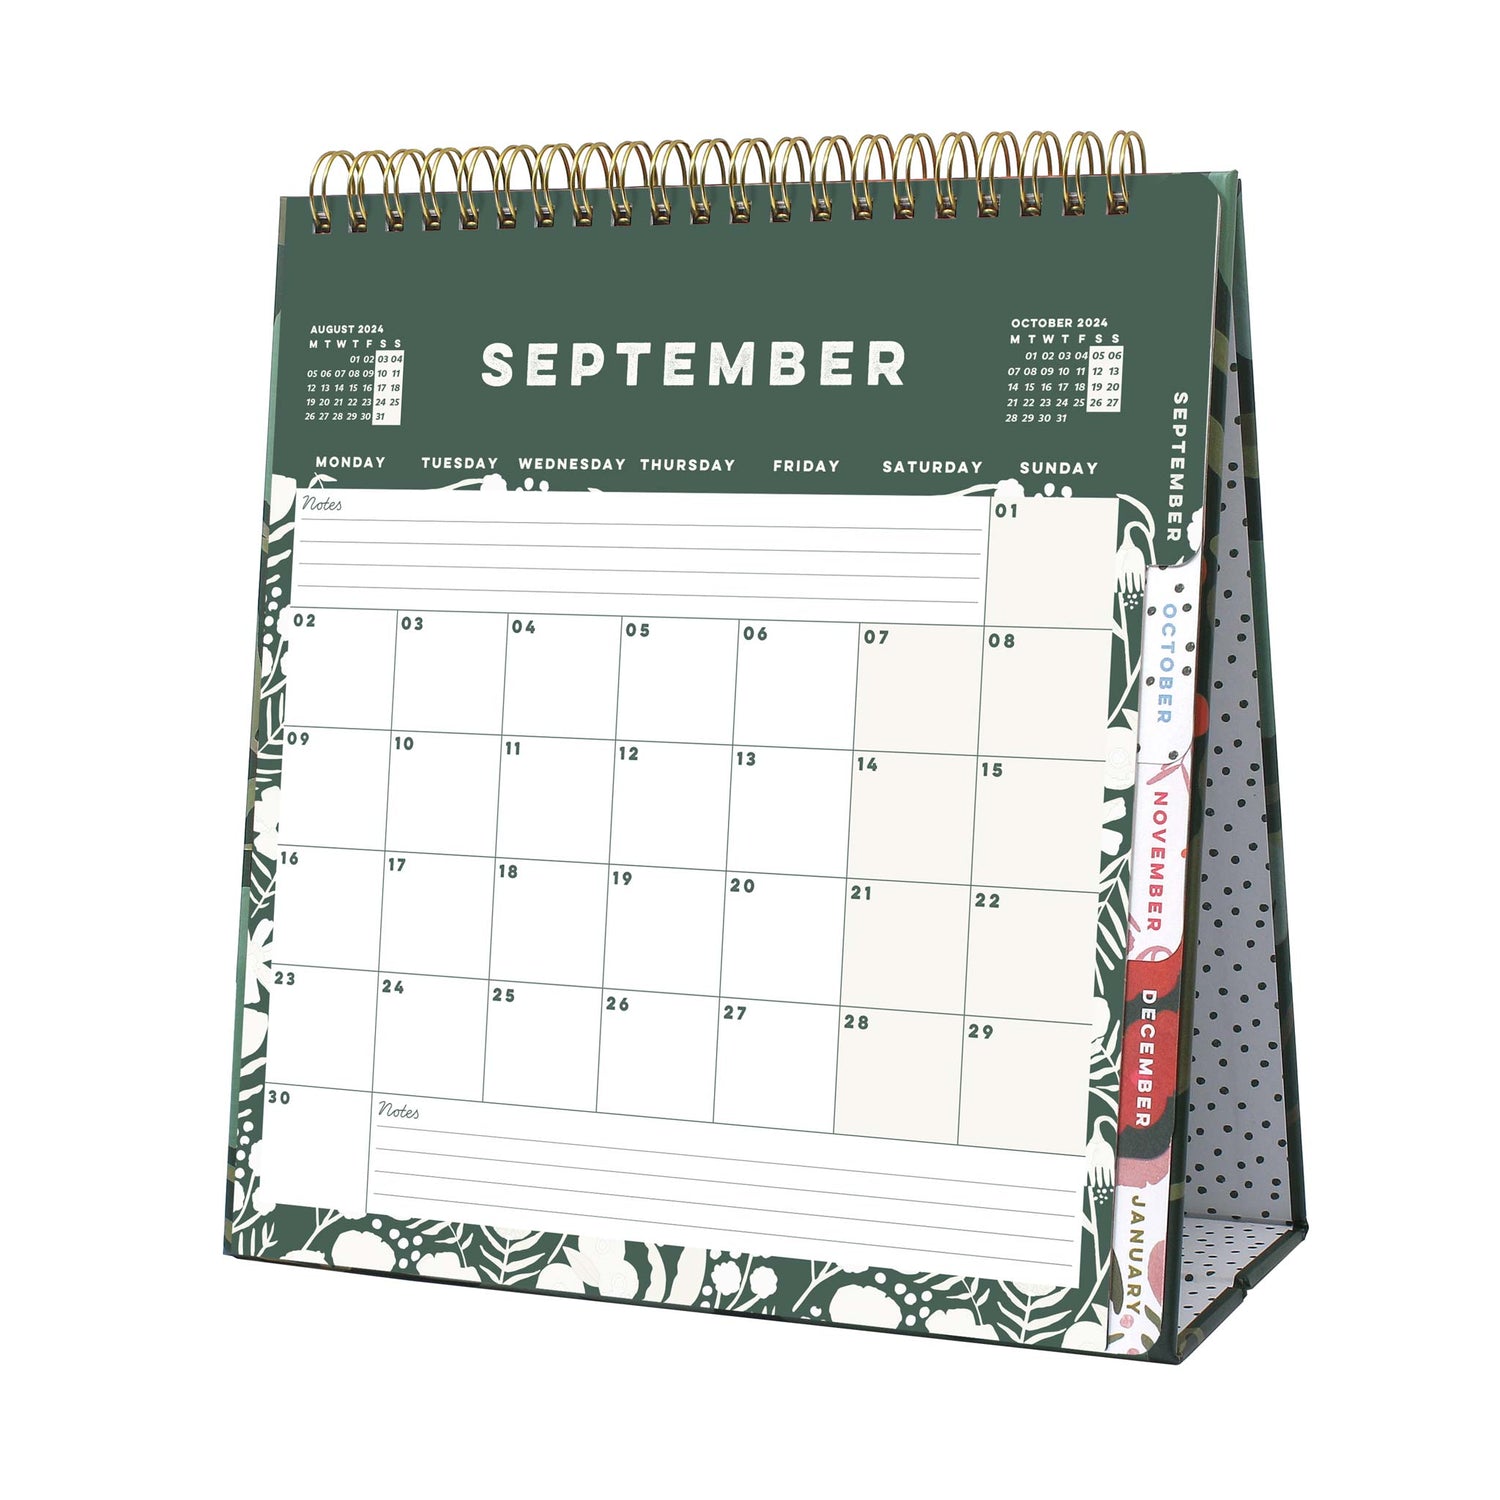 An open desk calendar page for September in dark green